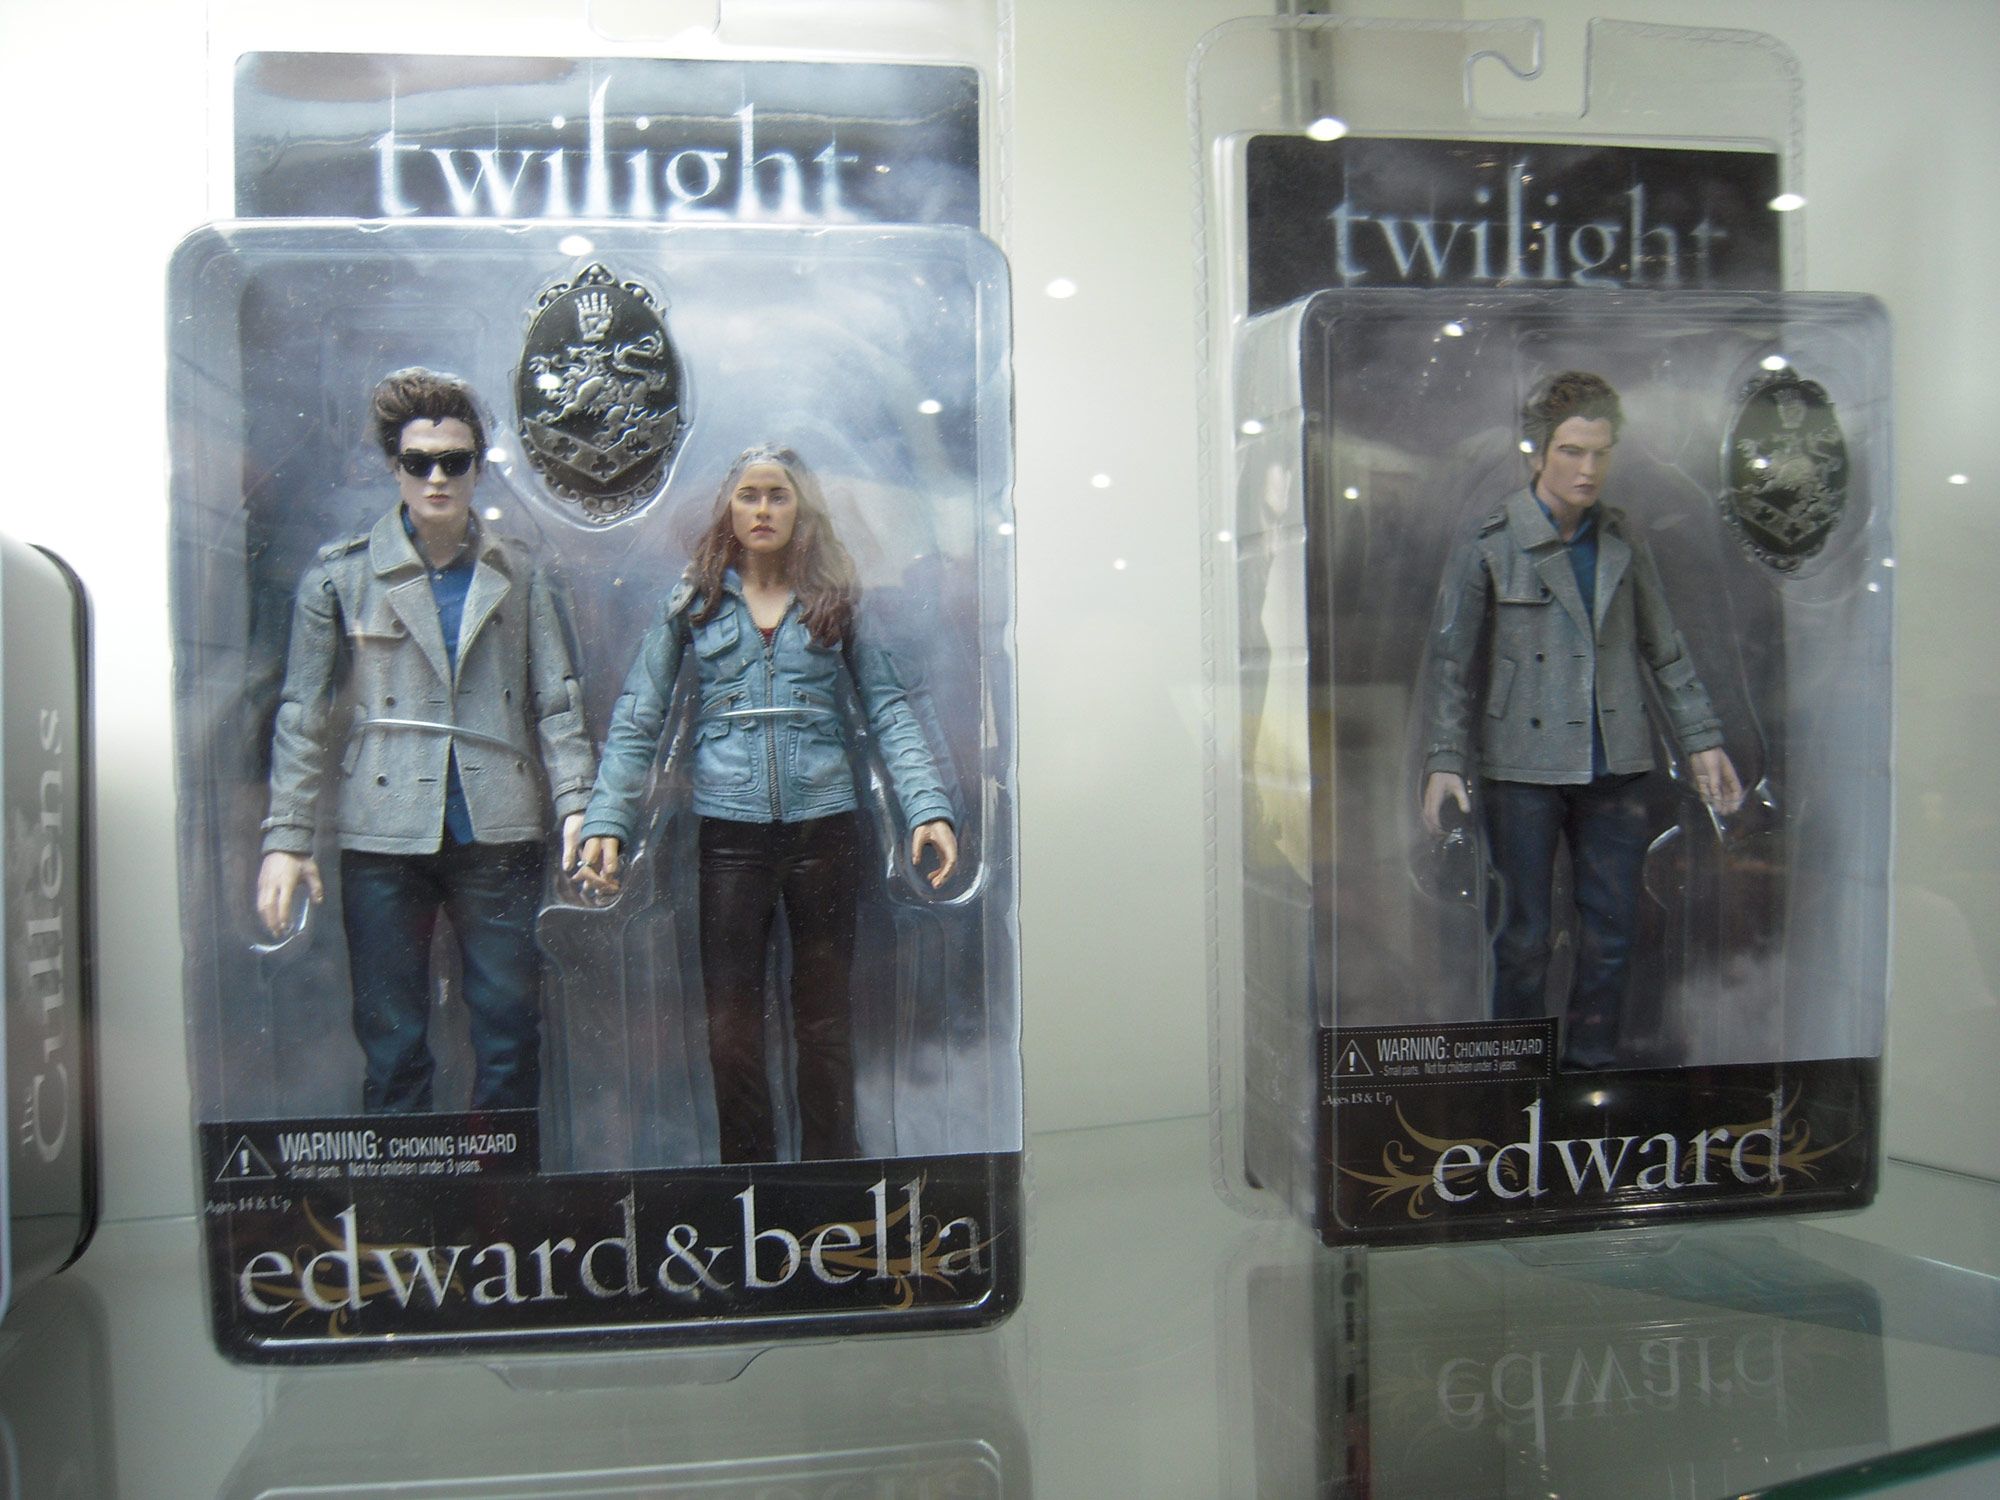 The Twilight Saga's New Moon Merchandise